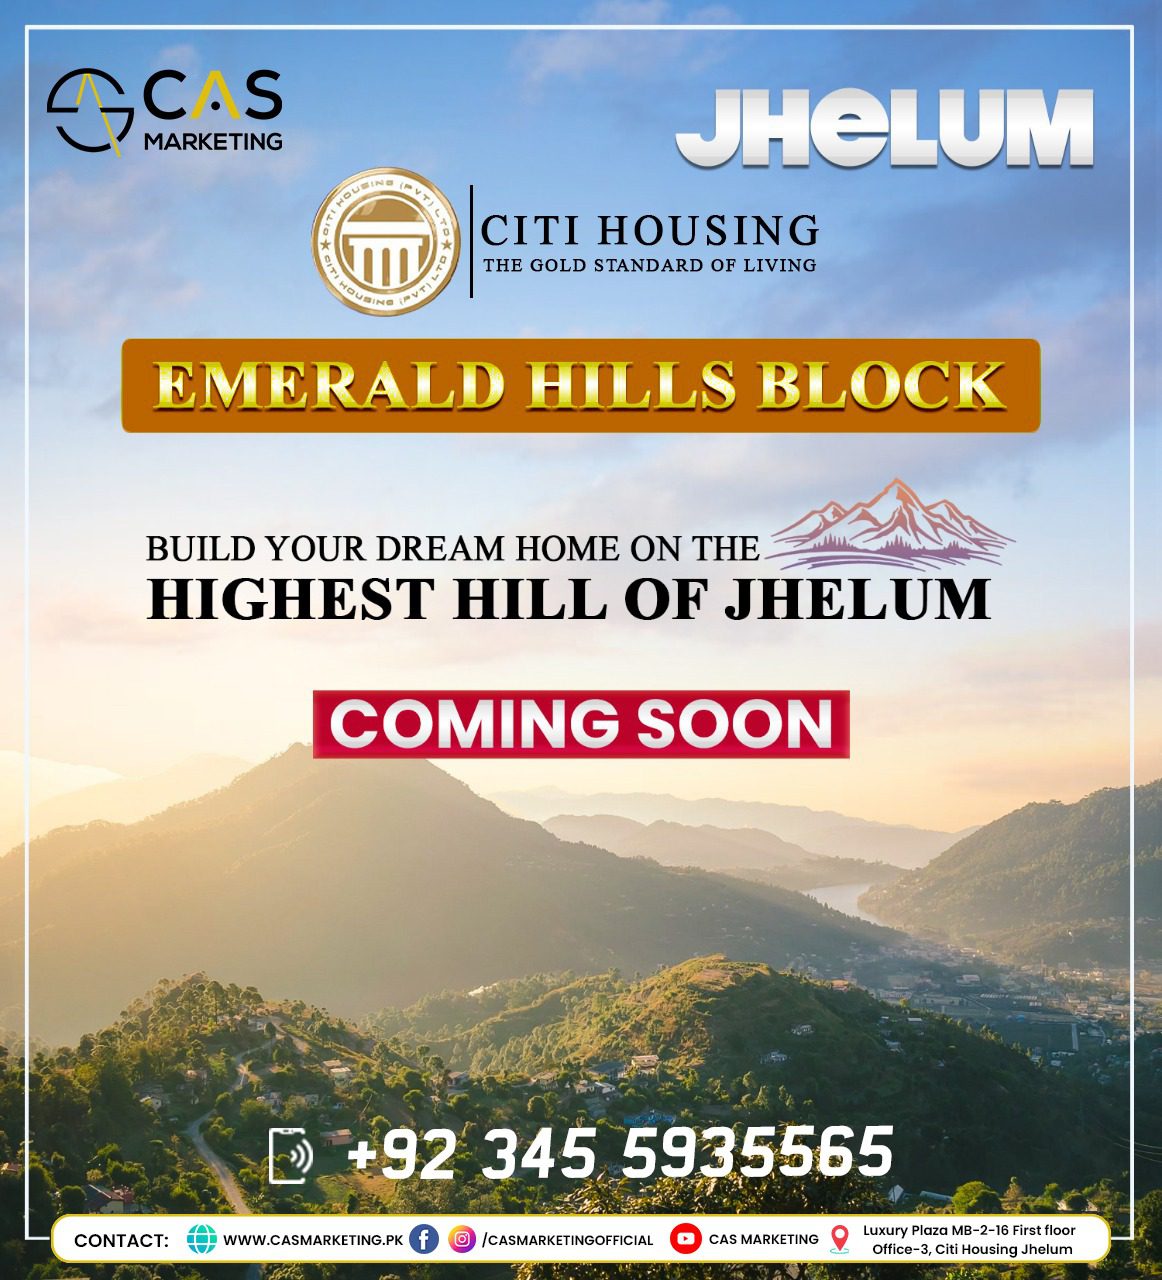 Emerald Hills Citi Housing Jhelum Coming Soon